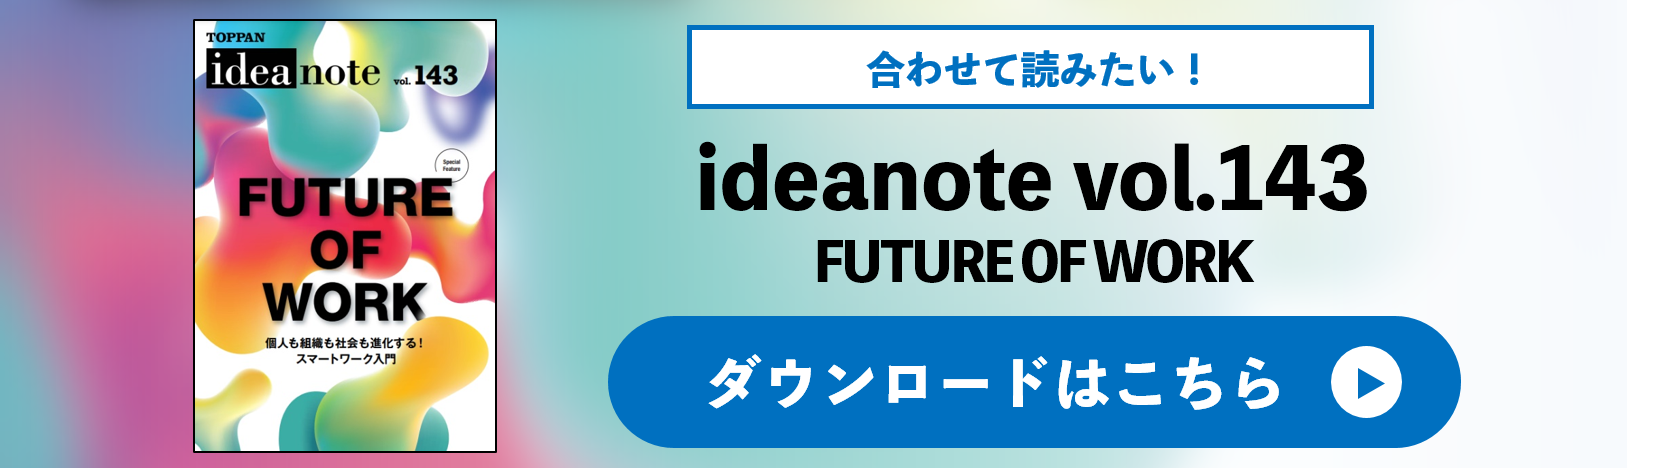 ideanote vol.143 FUTURE OF WORK